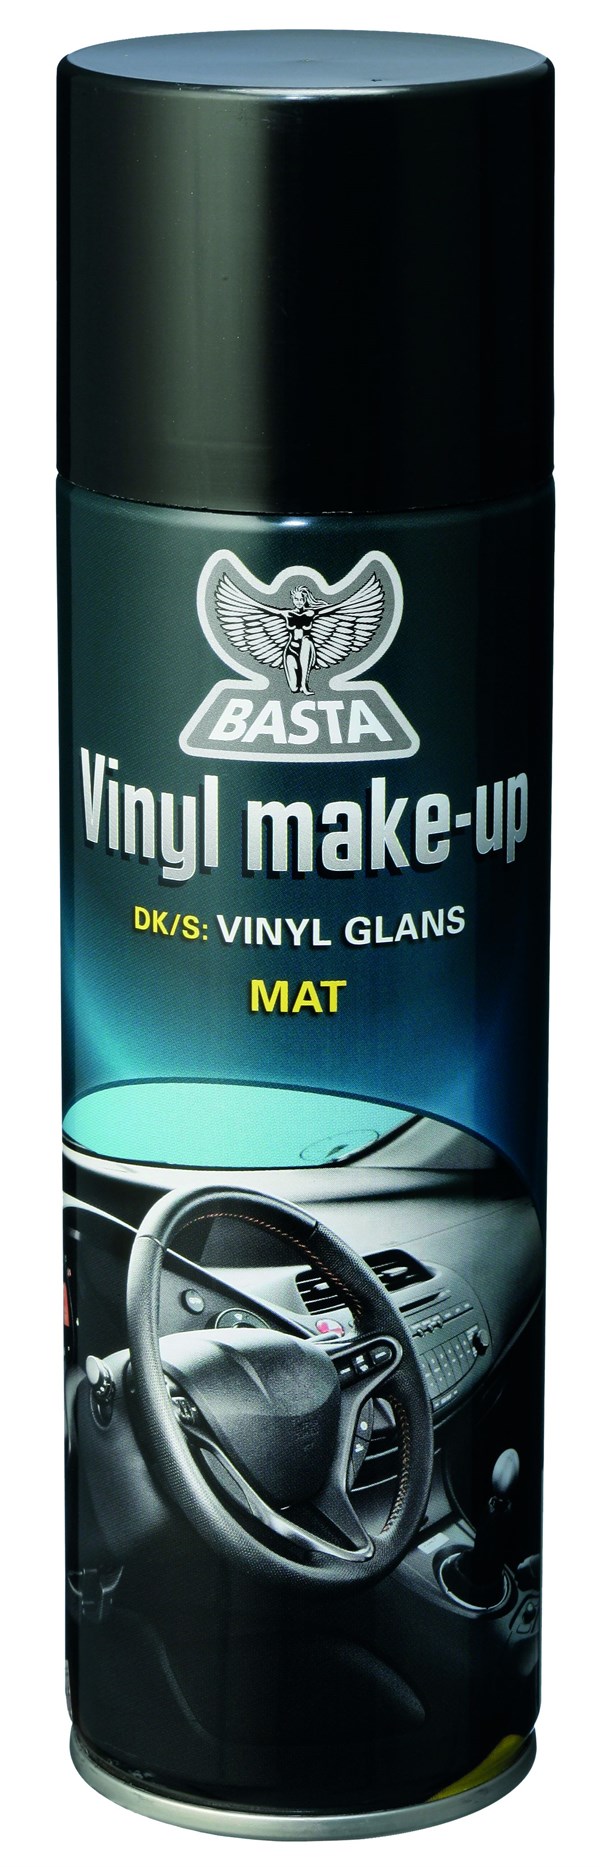 Basta Vinyl Makeup Mat (300ml)